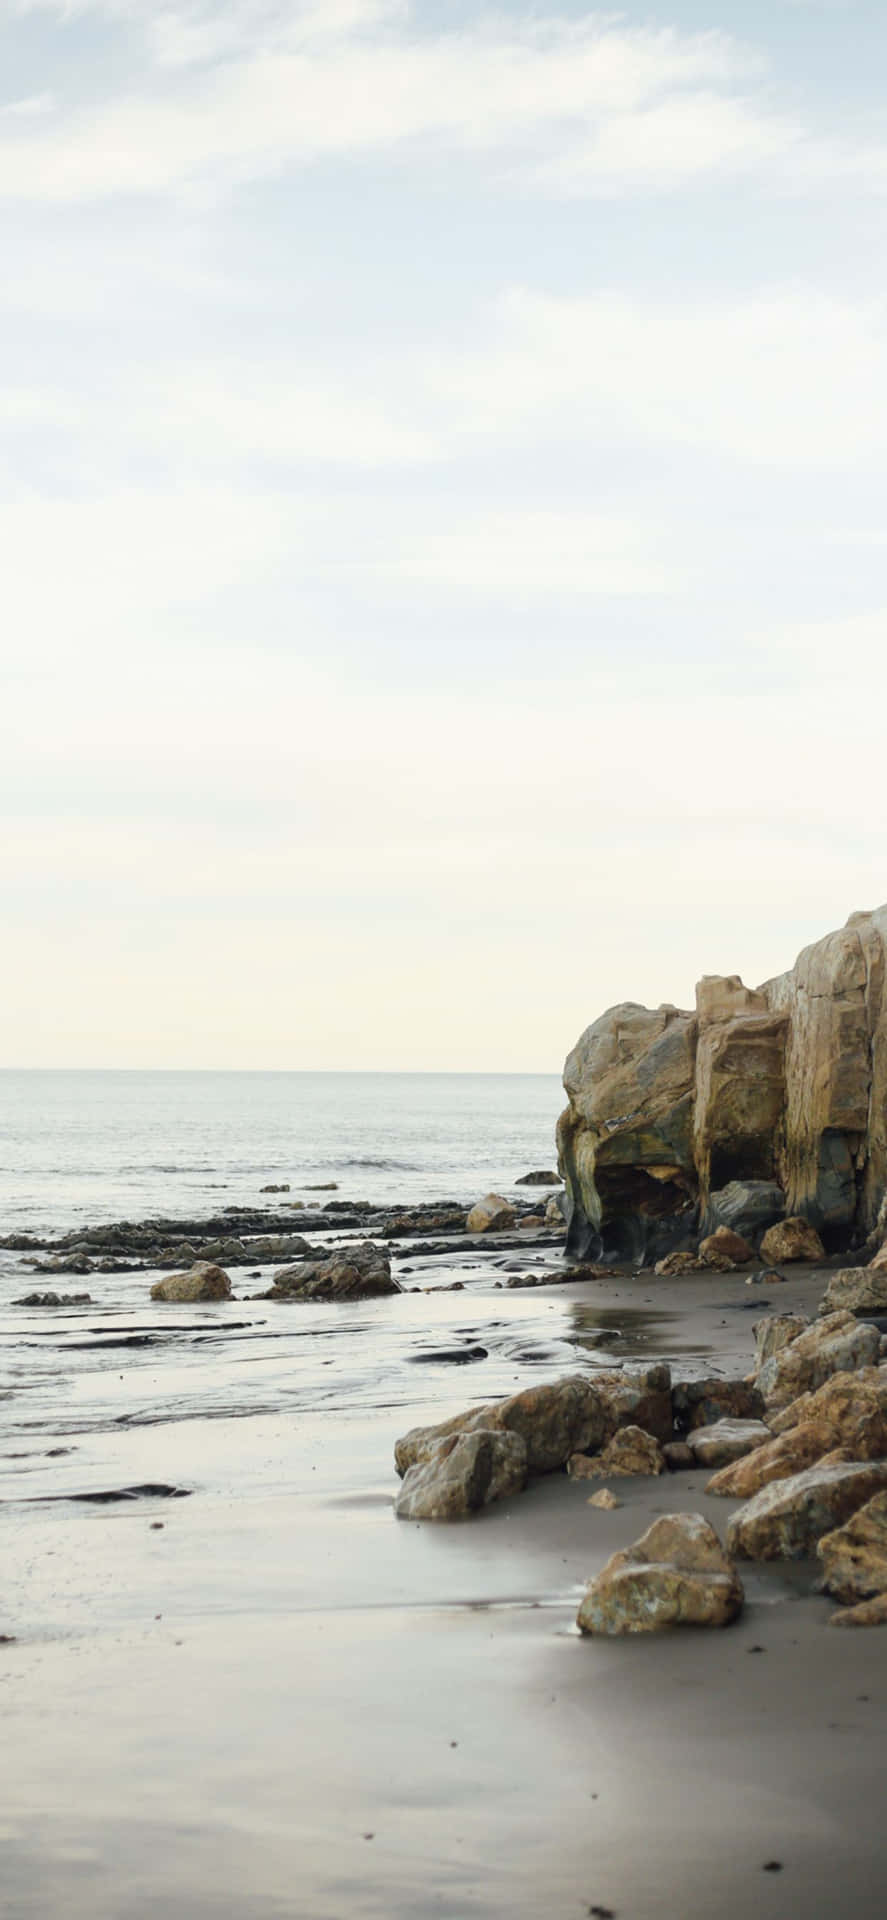 Iphonexs Max Malibu Rocks By The Beach Bakgrund